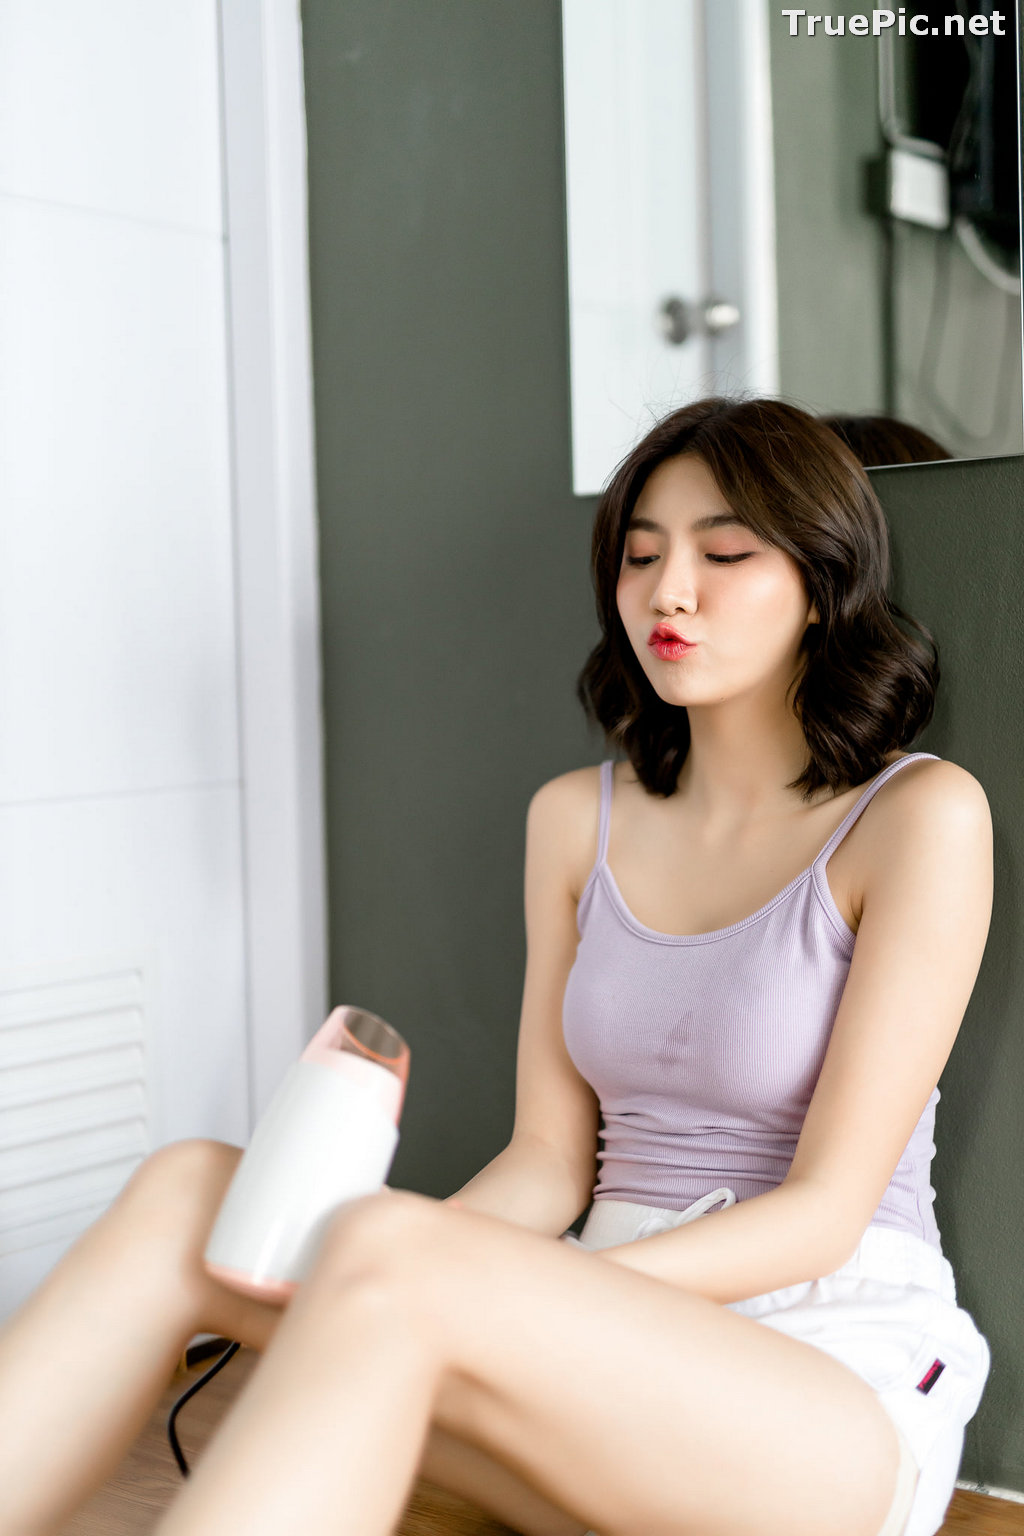 Image Thailand Model - Sasi Ngiunwan - Beautiful Girl Woke Up - TruePic.net - Picture-6